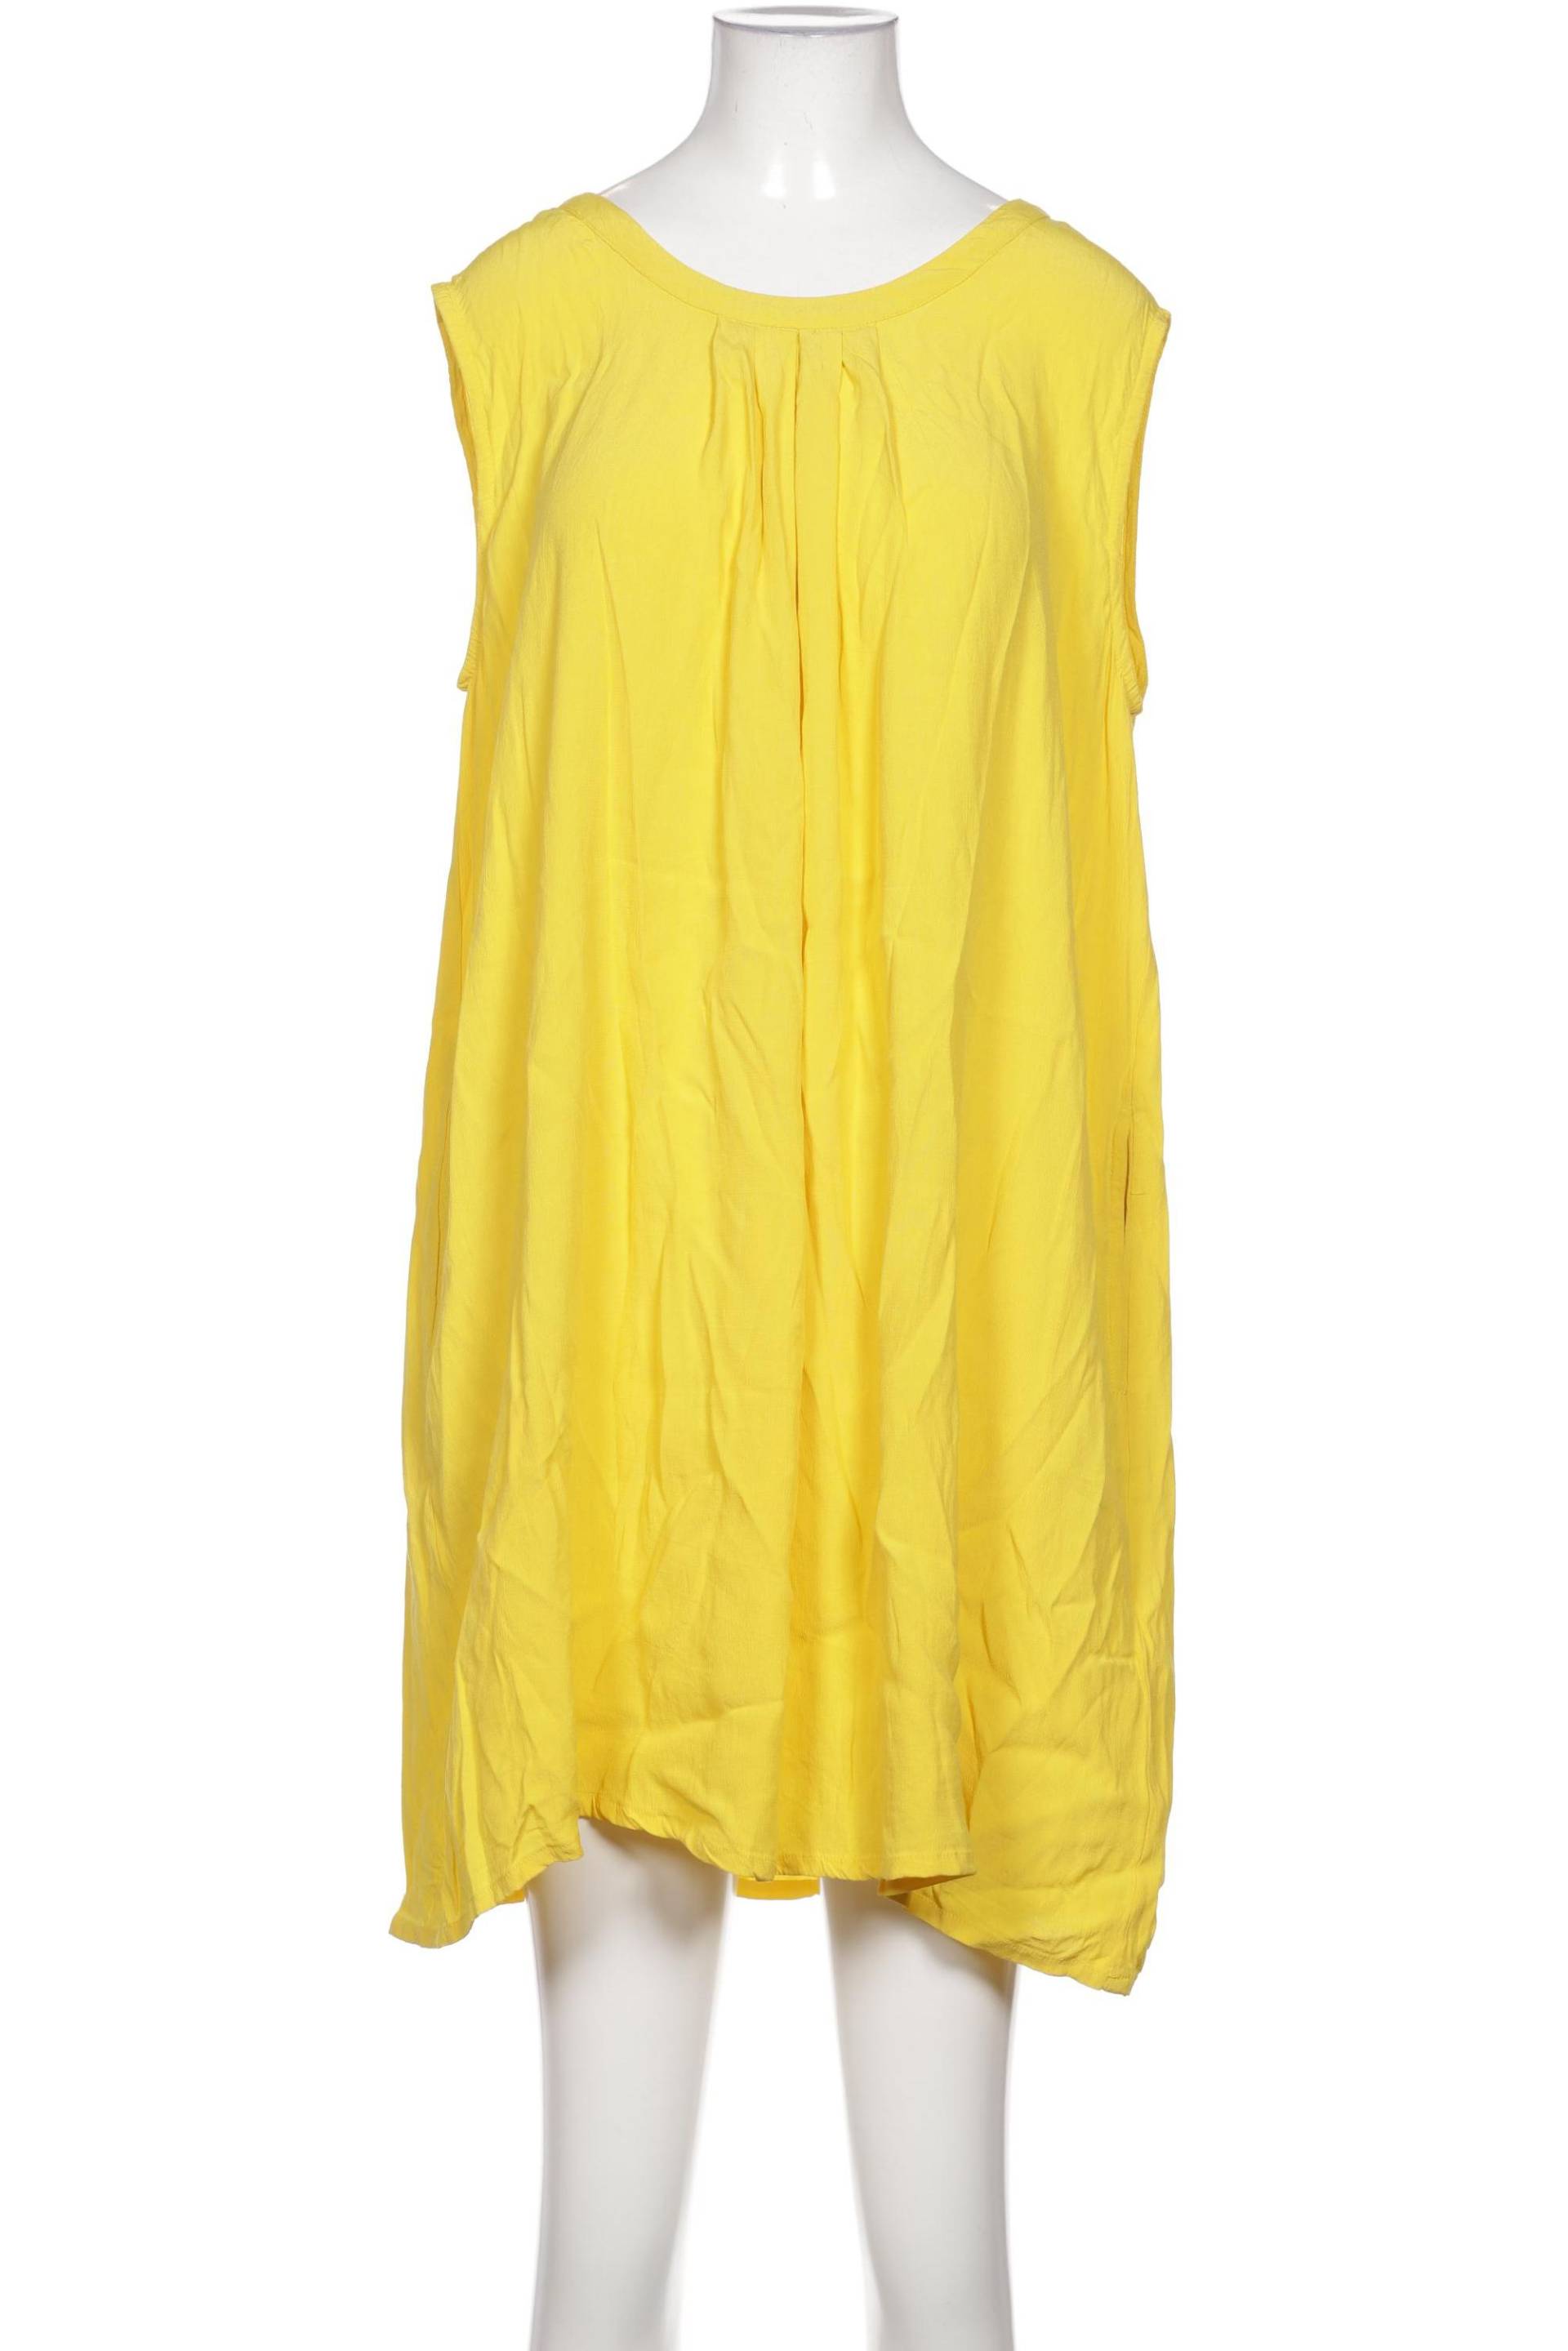 The MASAI Clothing Company Damen Kleid, gelb von The MASAI Clothing Company